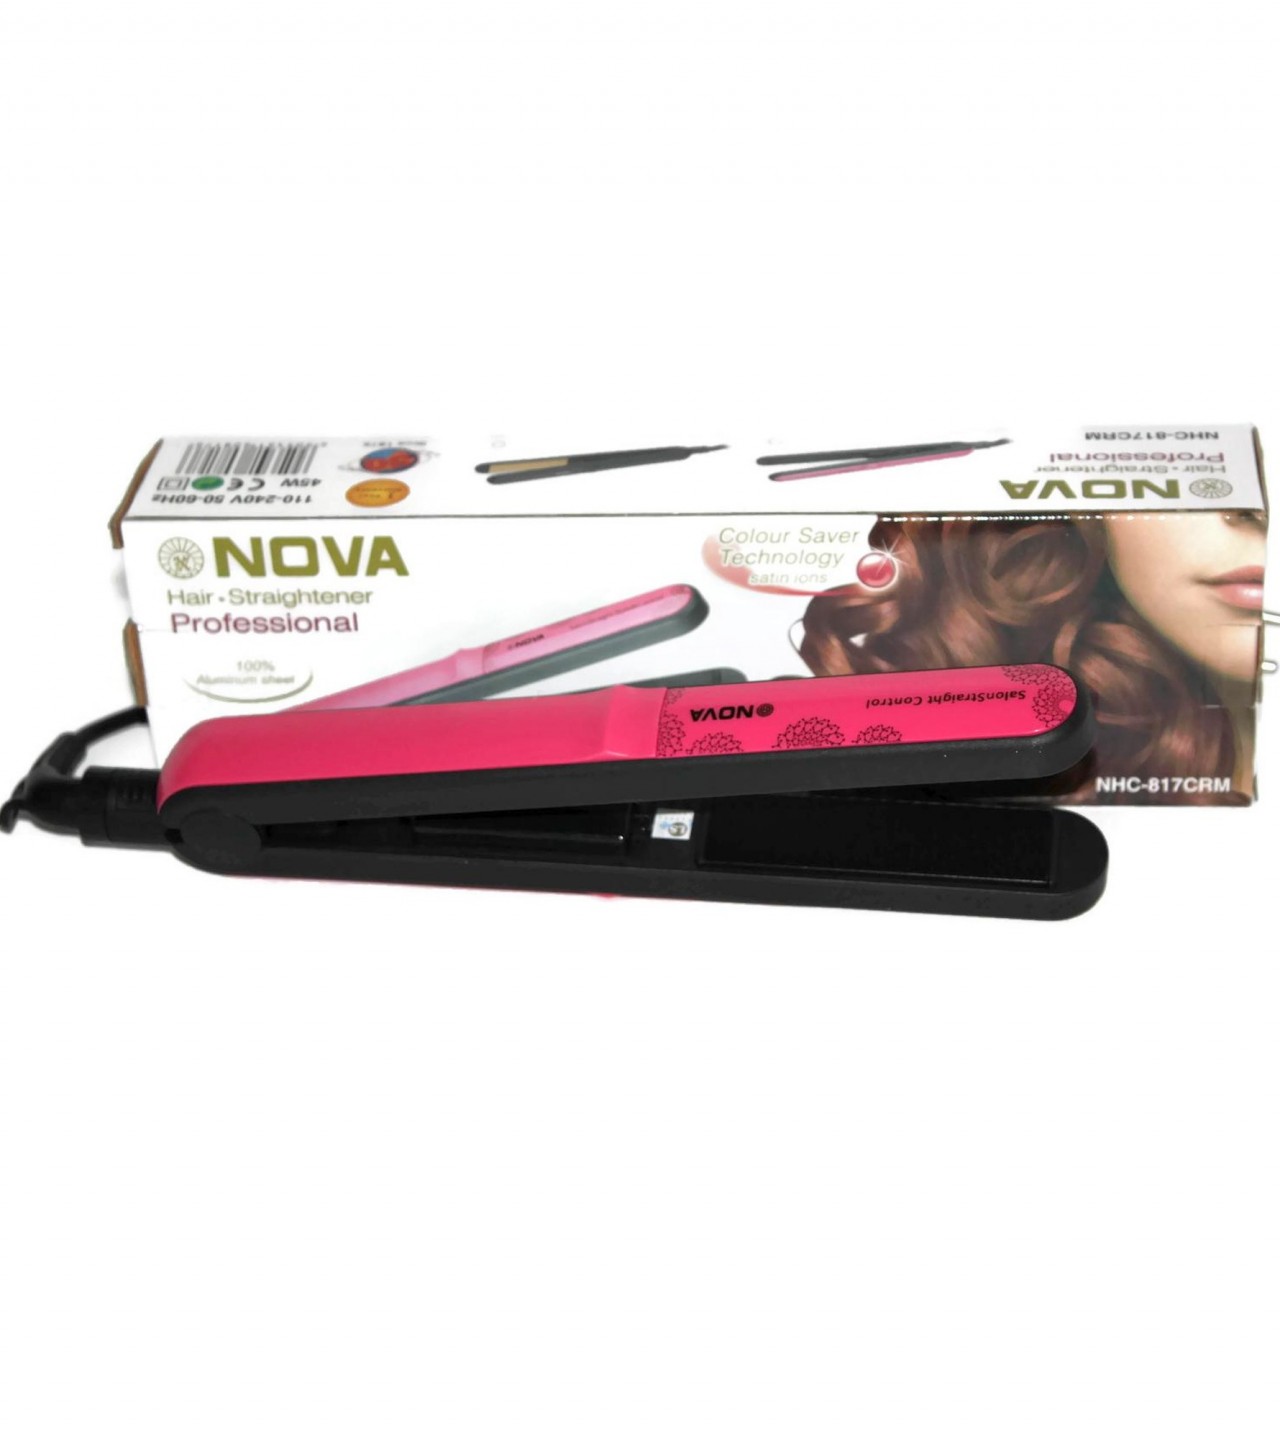 Nova-817 Original Hair Straightener - 1 year warranty